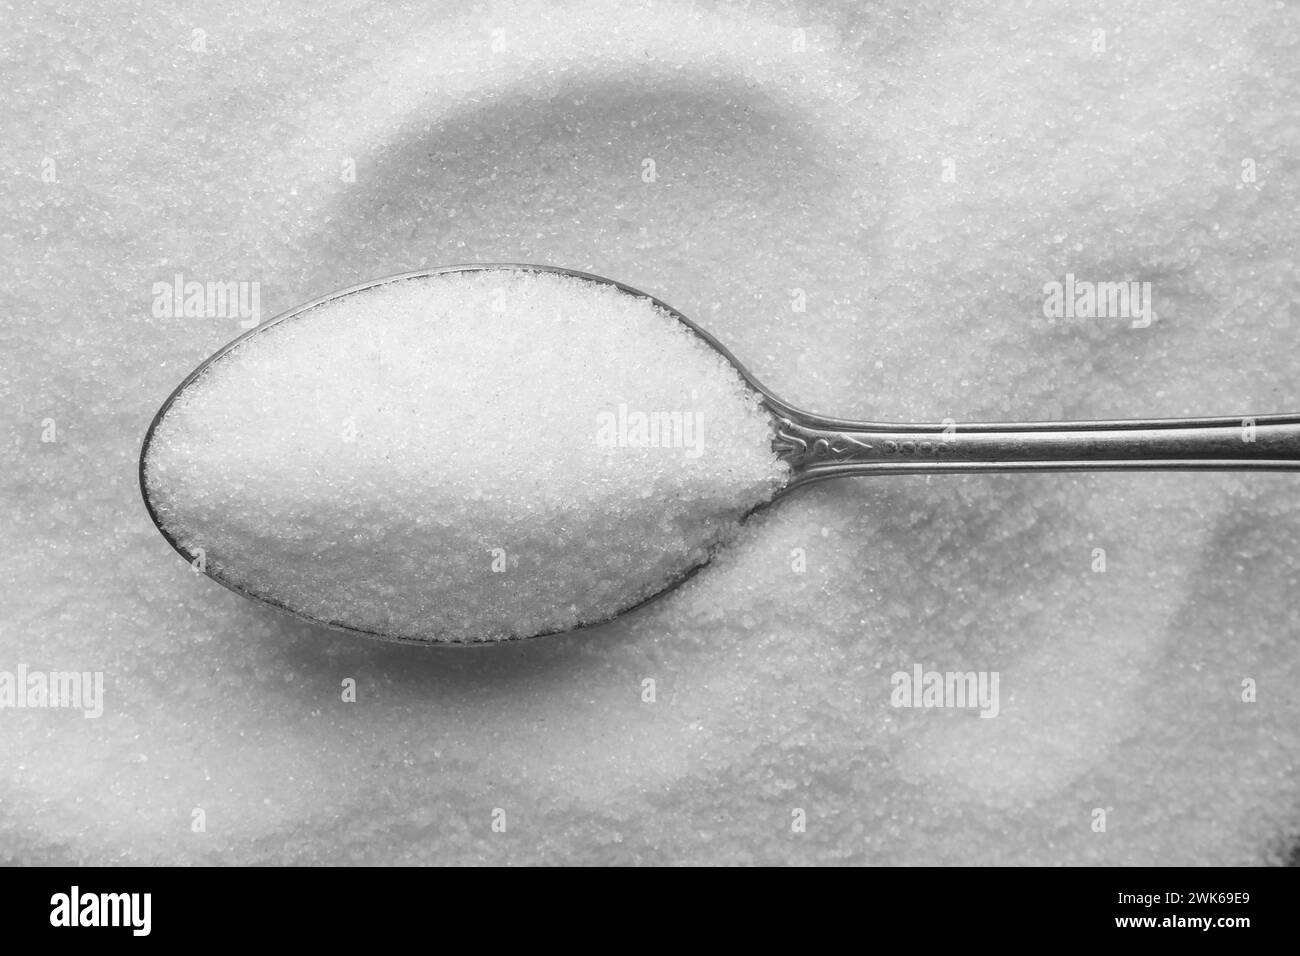 Metal spoon on granulated sugar, top view Stock Photo